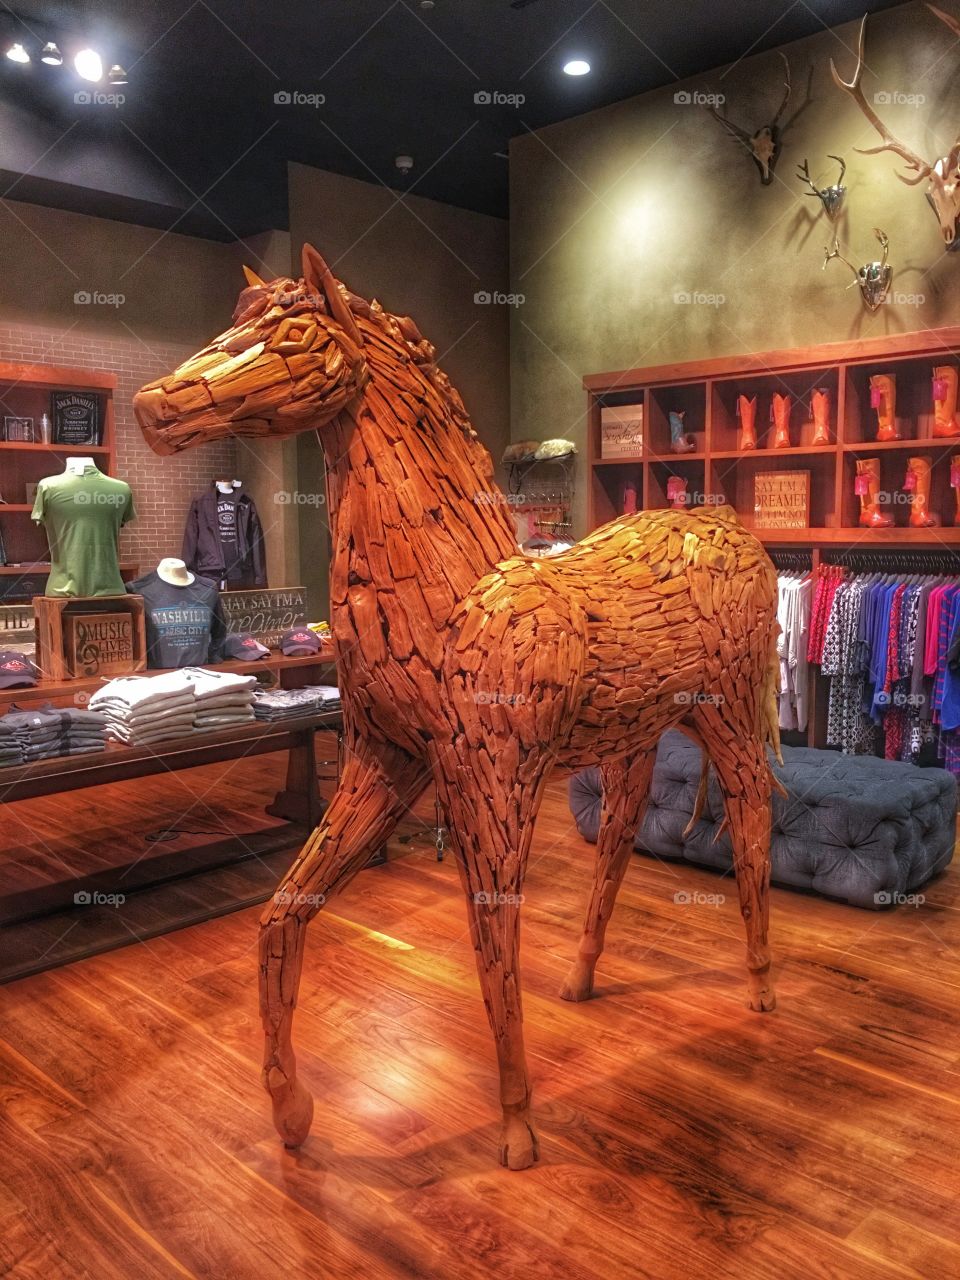 Wooden horse
